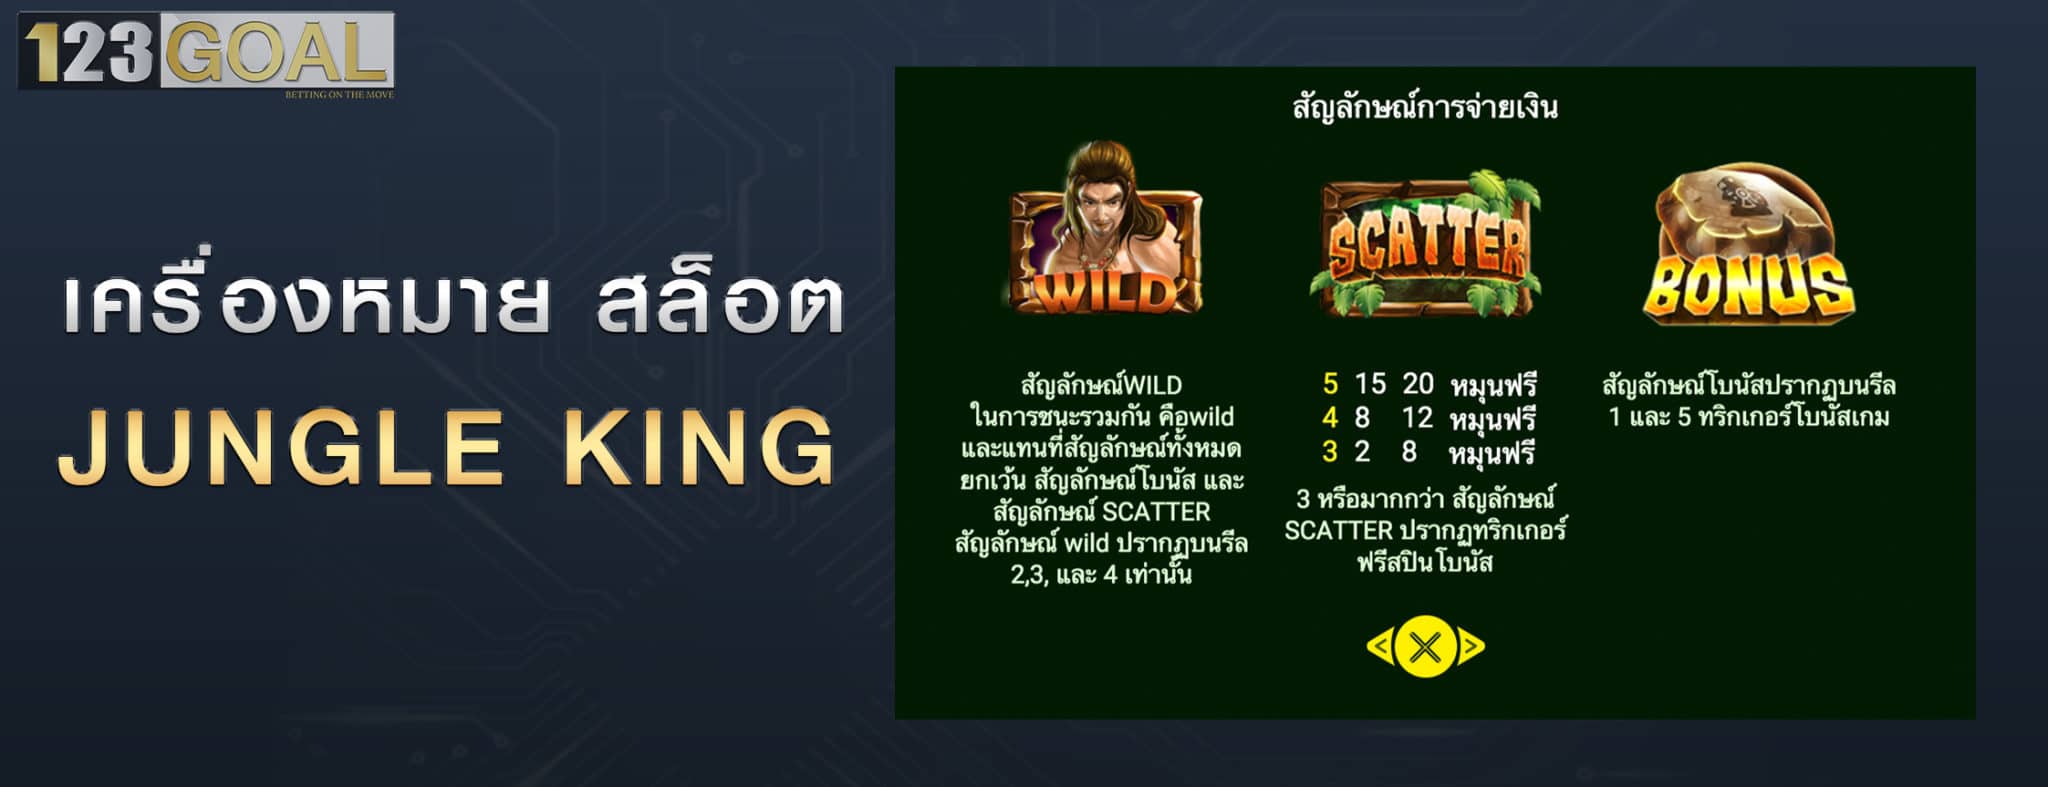 Spadegaming Slot Online 123GOAL สล็อต ออนไลน์ ค่ายใหญ่สุดในเอเชีย